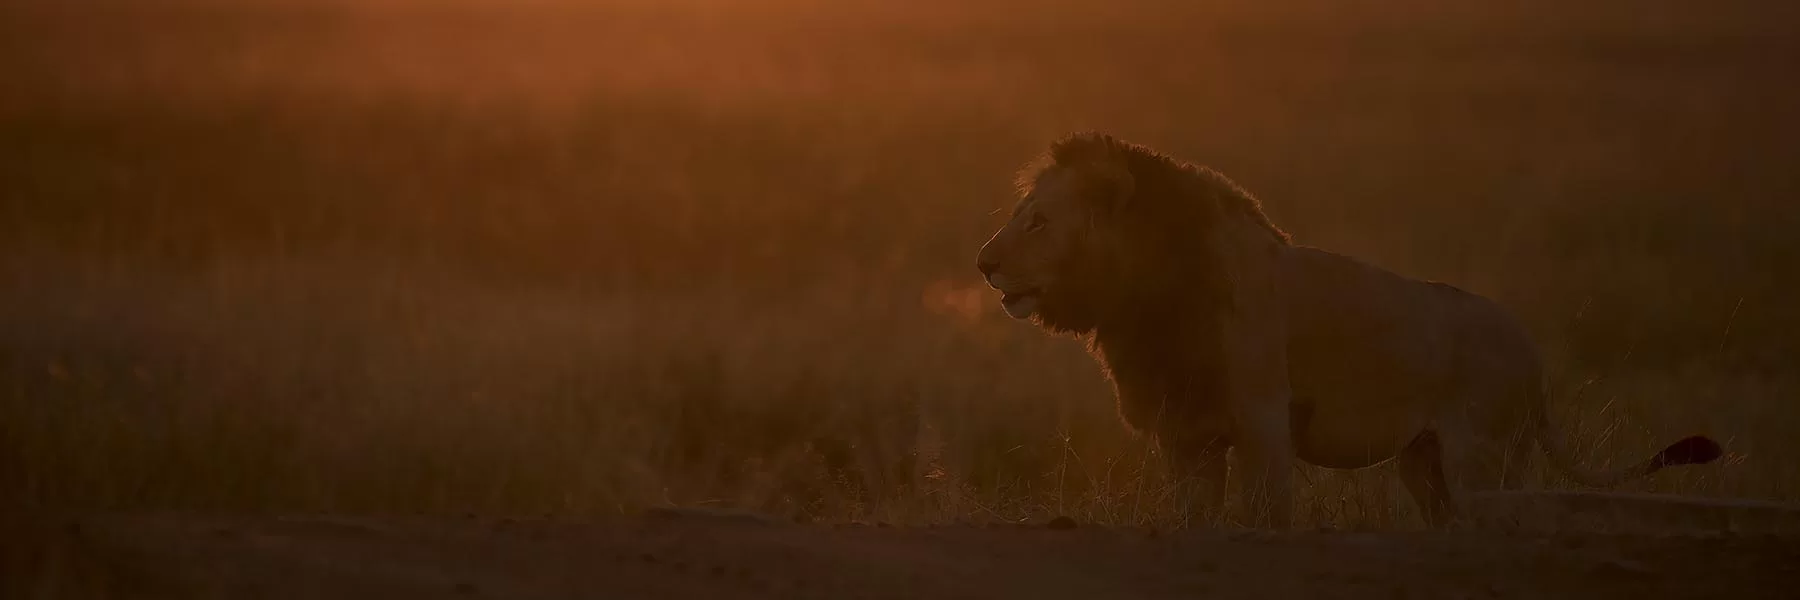 Lion safari in africa